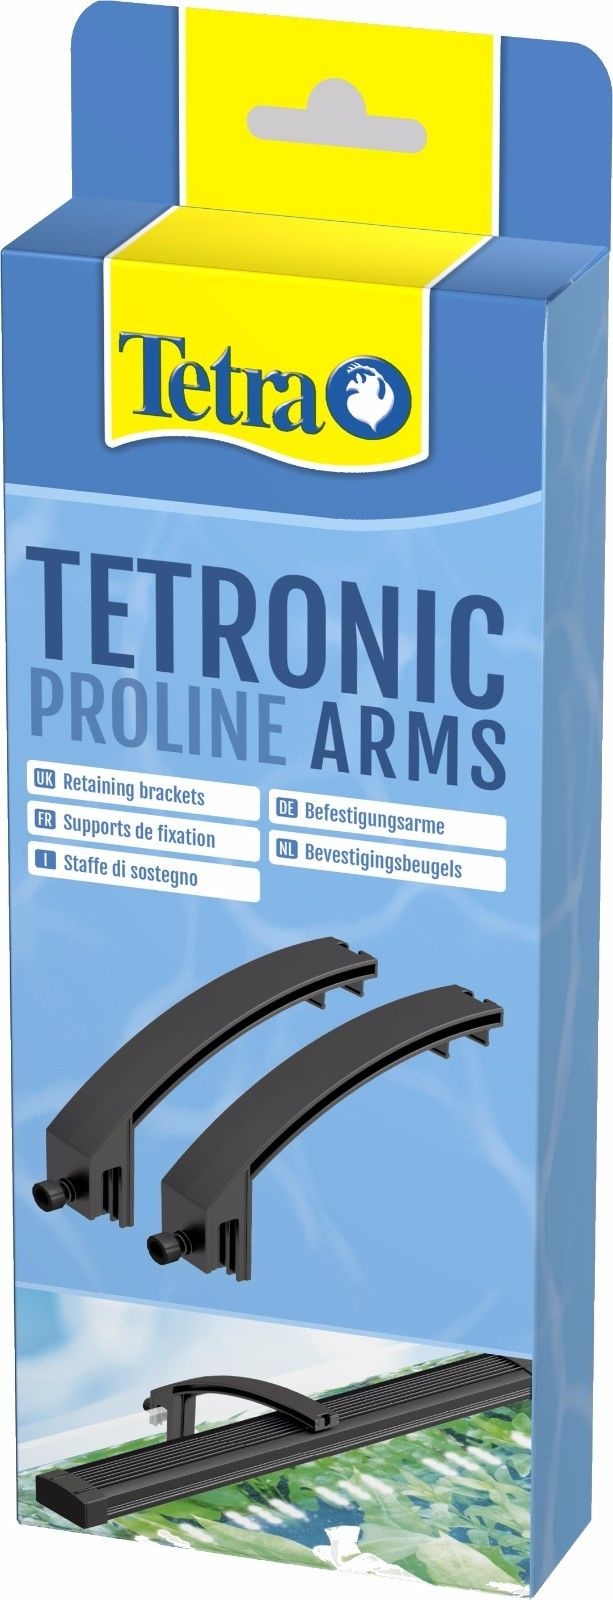 Tetra LED PROLINE ARMS